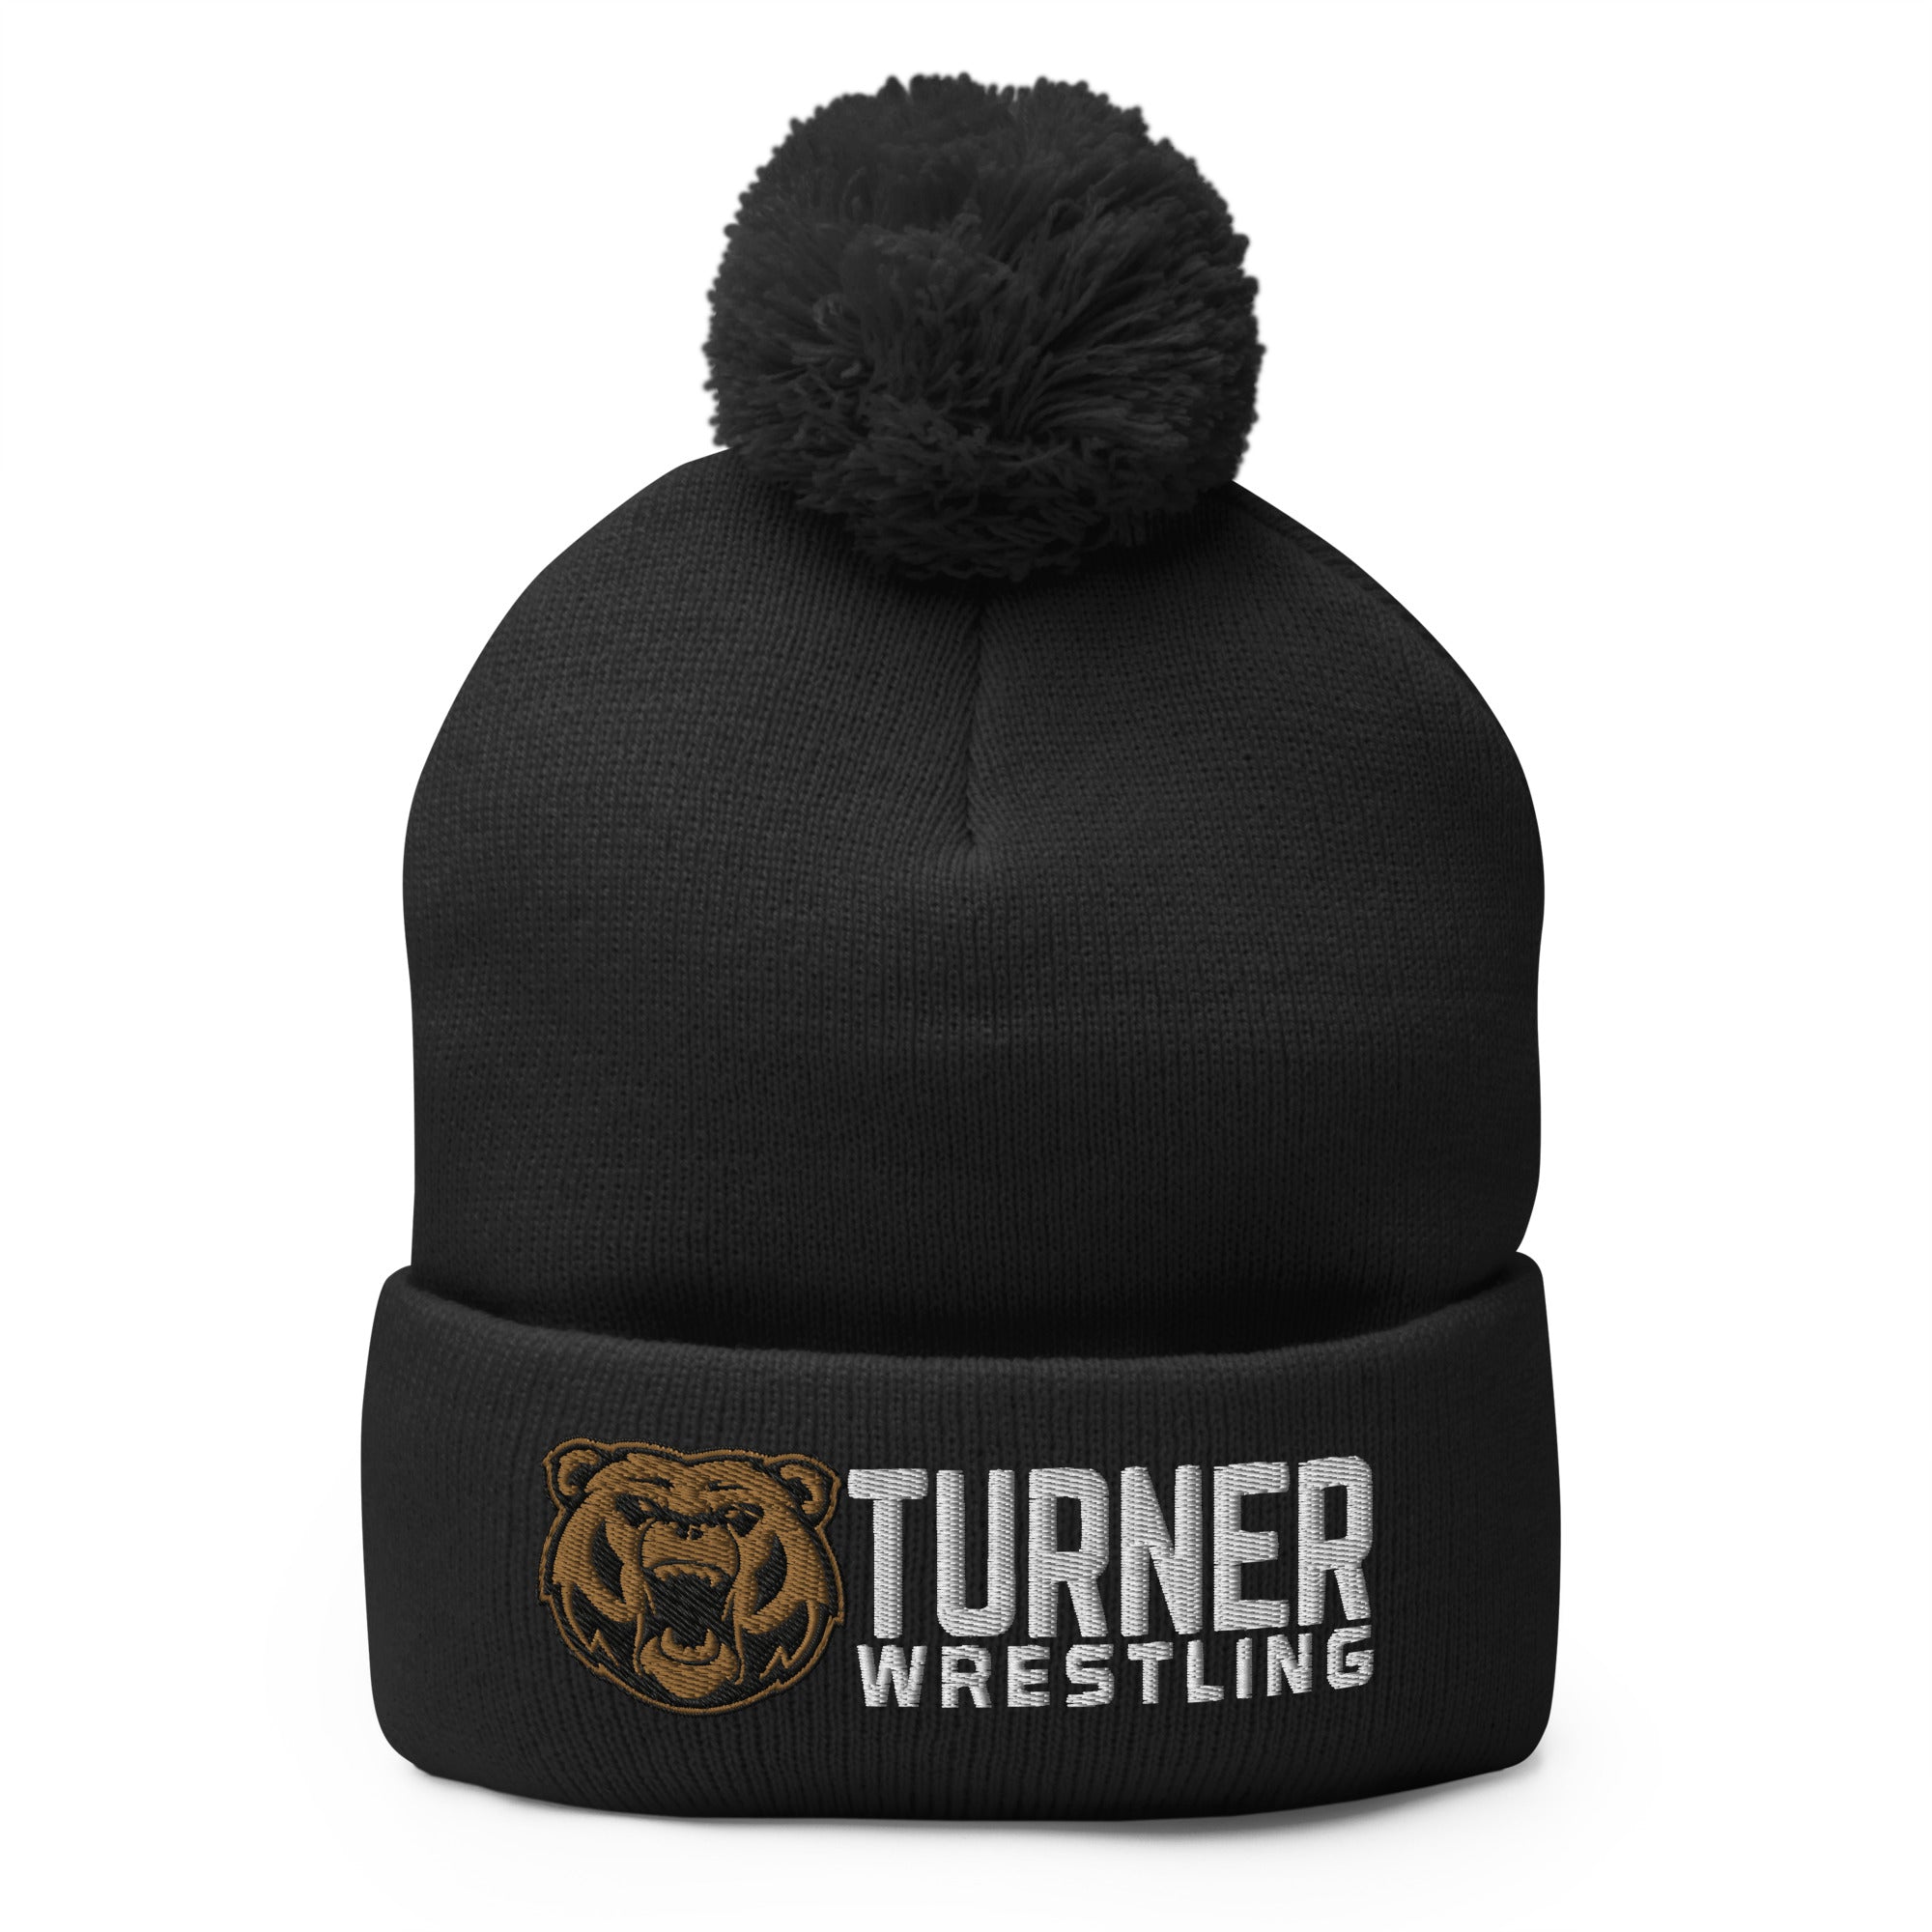 Turner Wrestling Club Pom-Pom Knit Cap